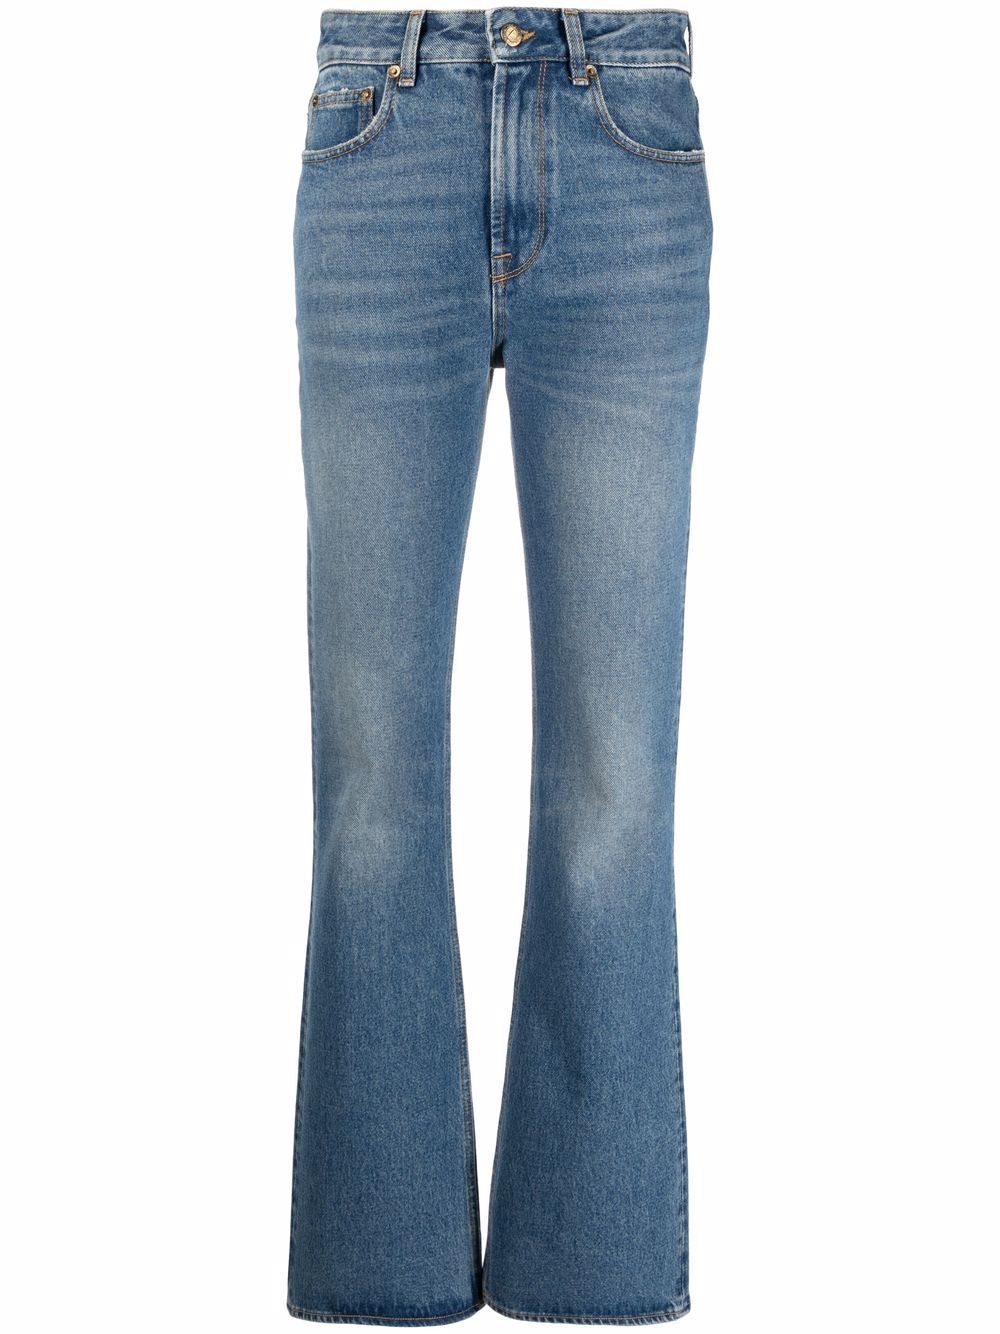 distressed-effect denim jeans